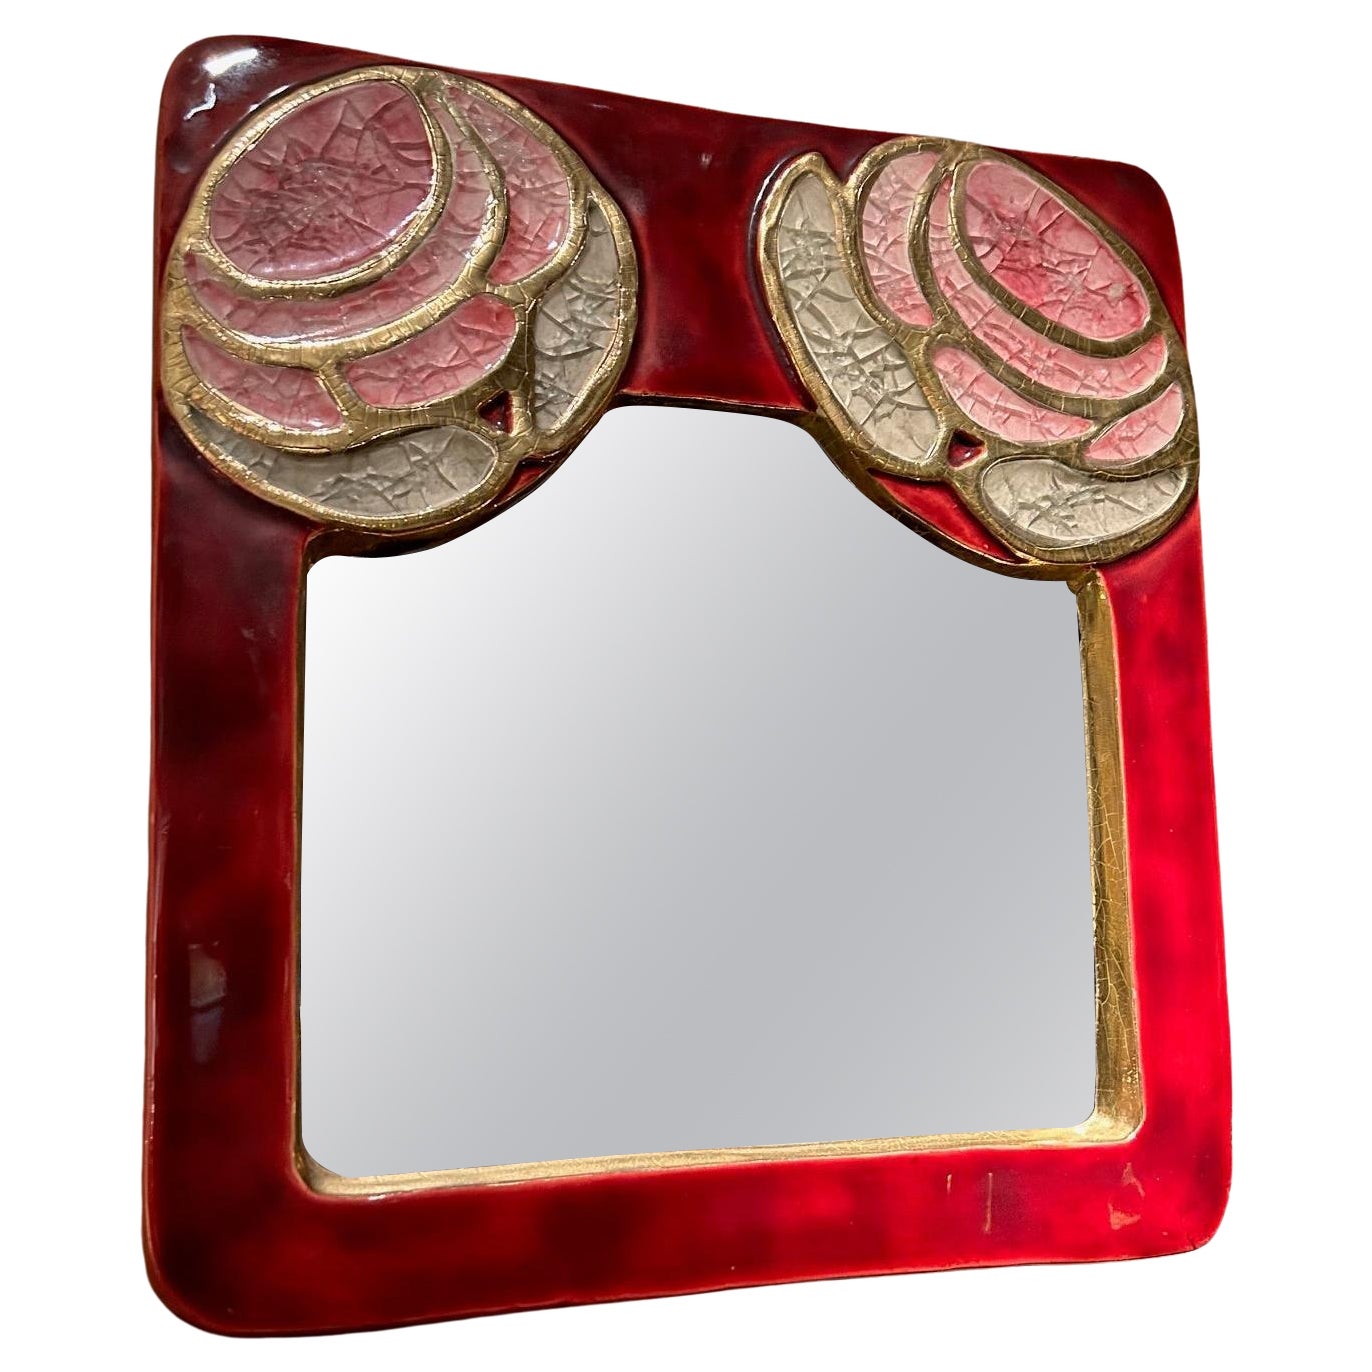 Ceramic Arts Décoratifs mirror by Mithé Espelt, France, 1960's